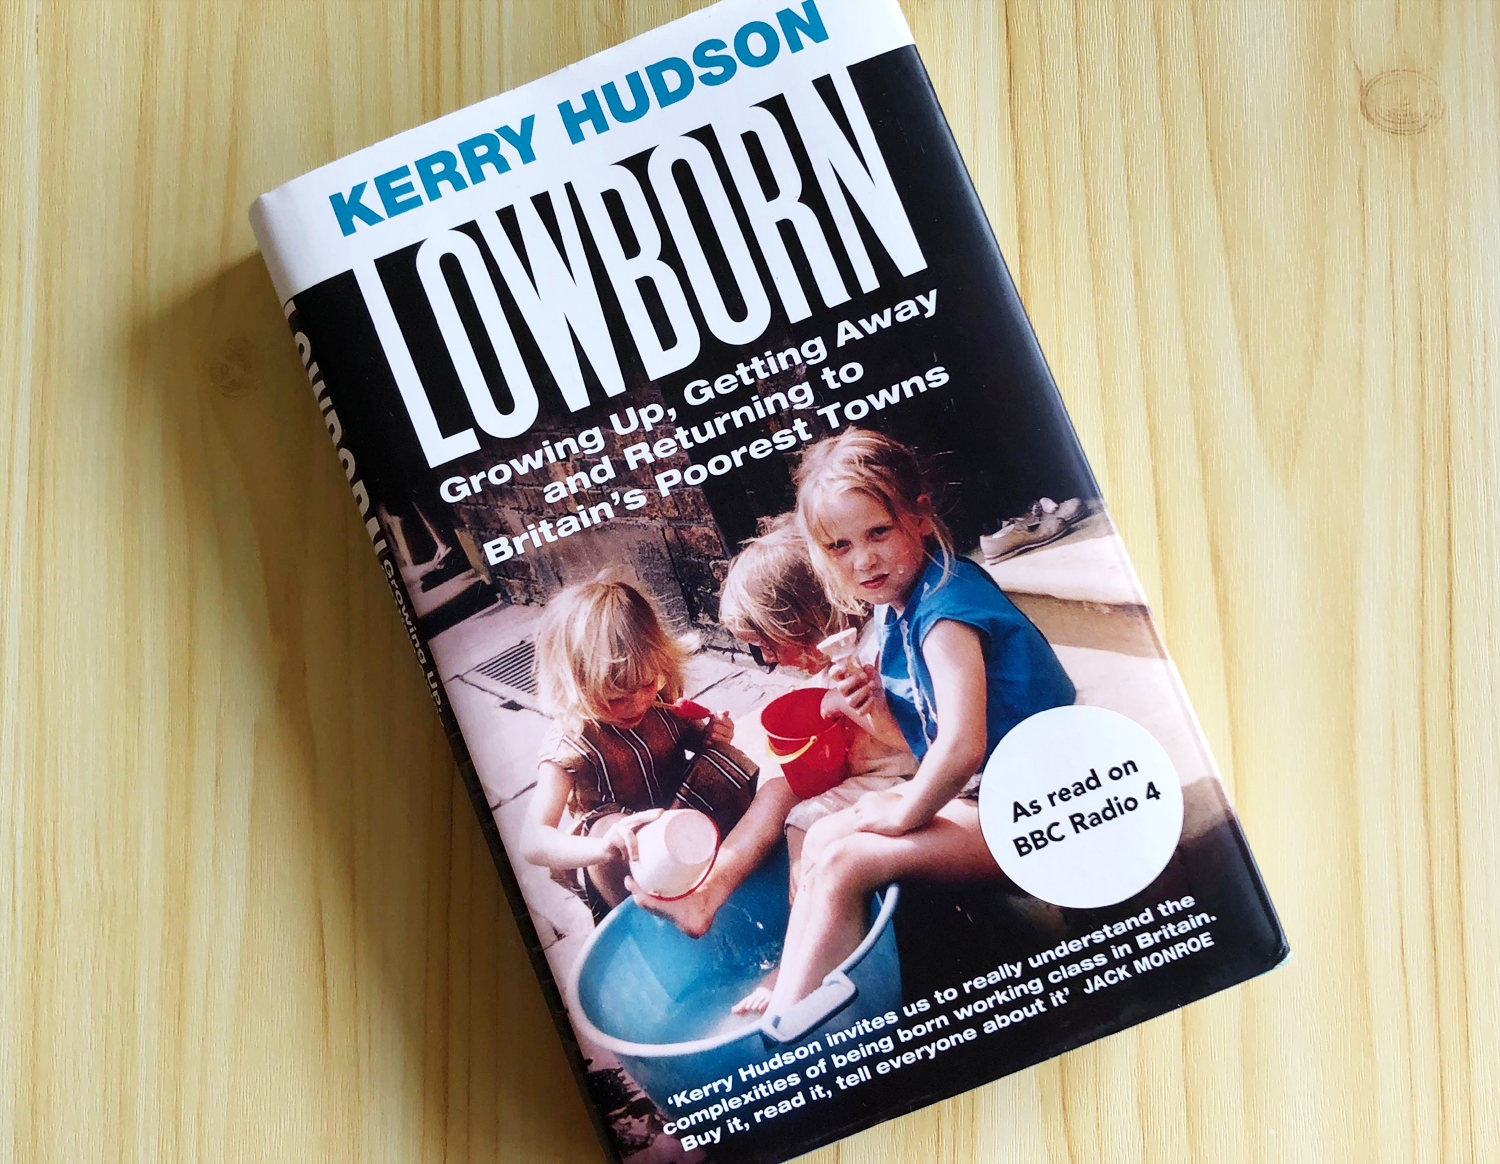 Foto do livro Lowborn: Growing Up, Getting Away and Returning to Britain's Poorest Towns de Kerry Hudson sobre uma mesa de pinus.